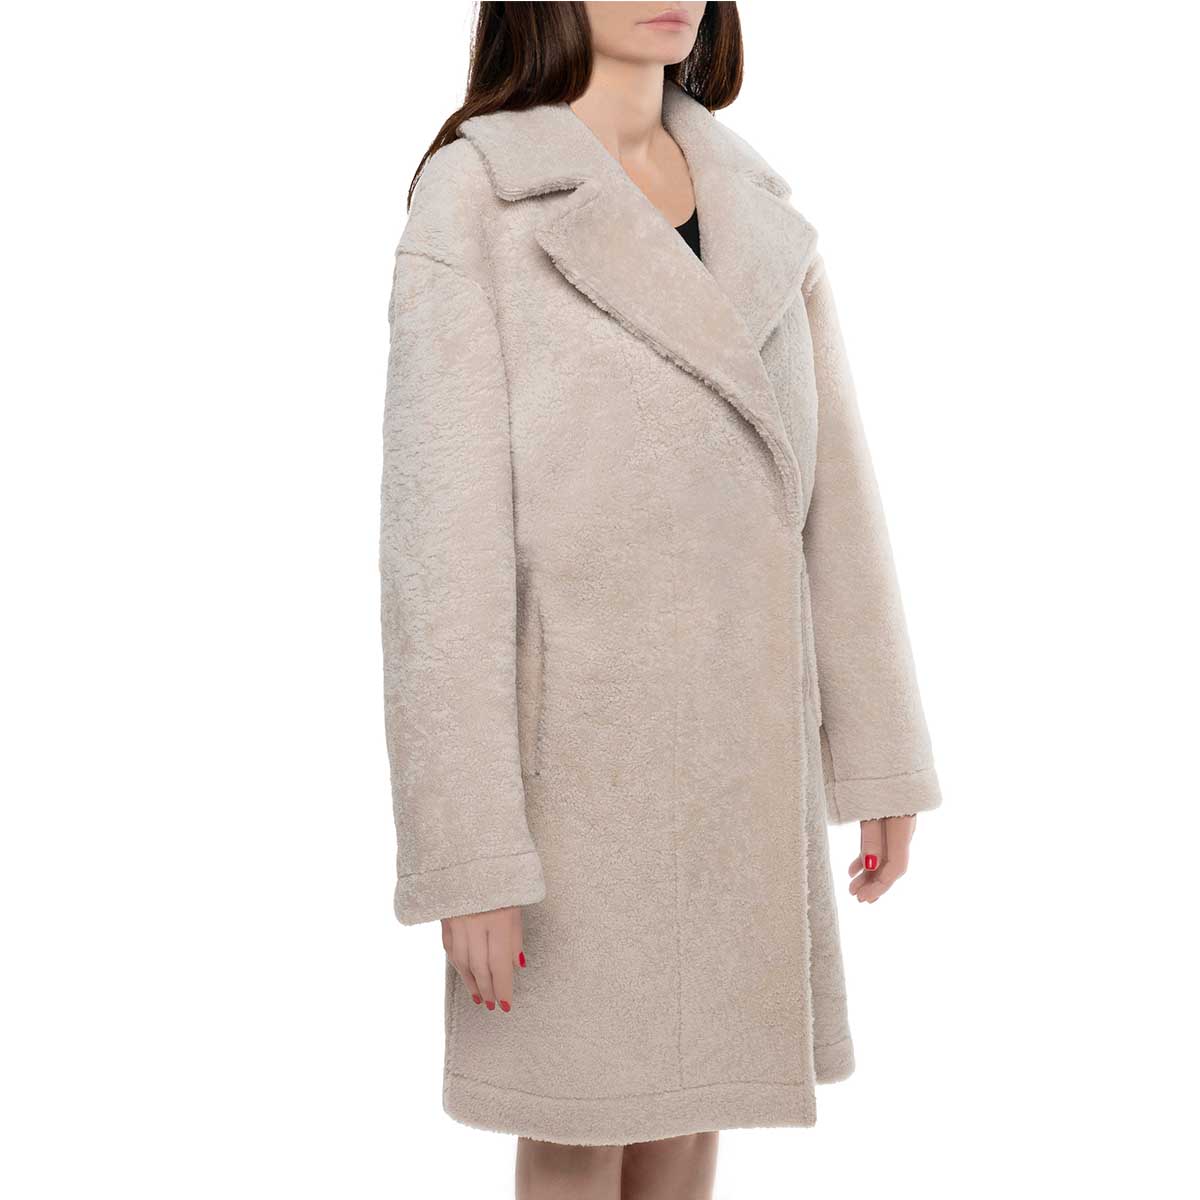 Long beige women's sheepskin coat with buttons